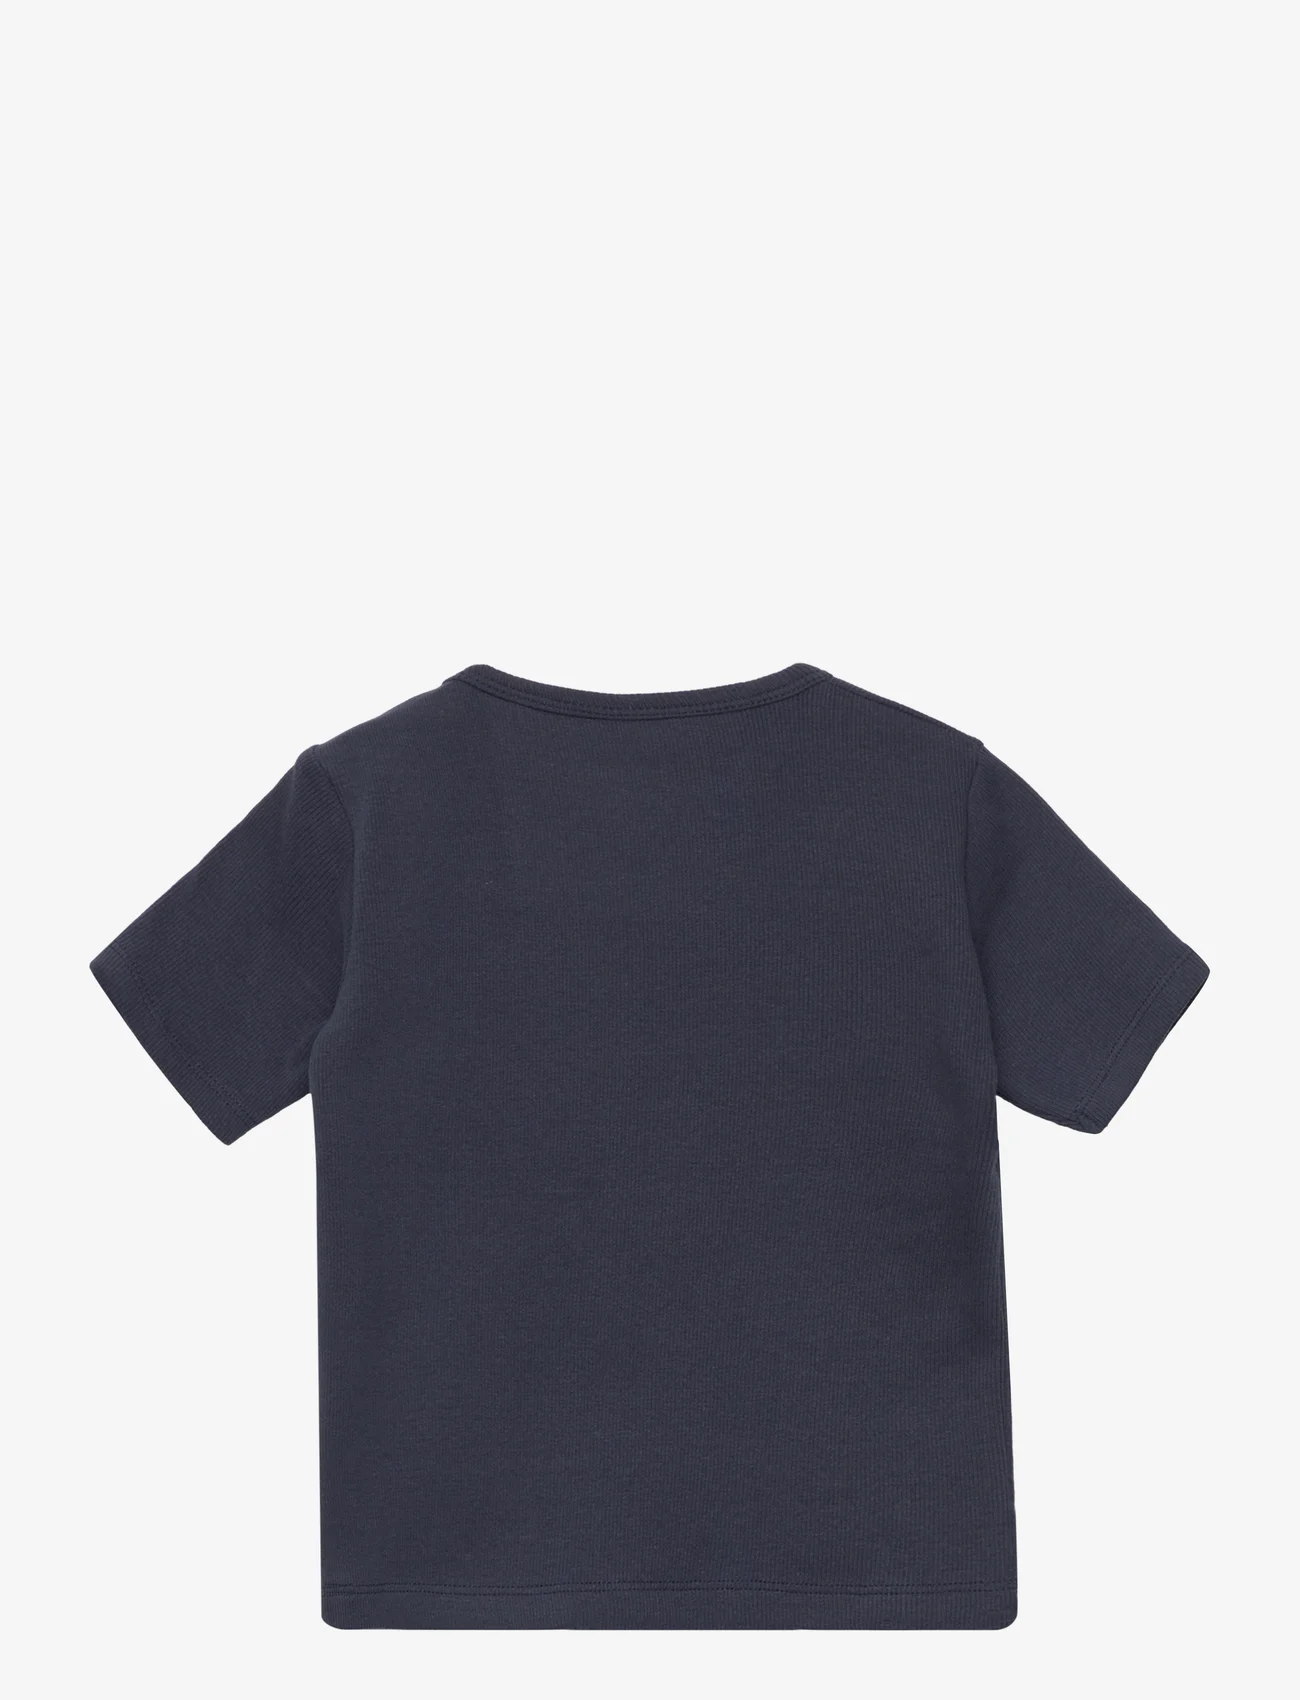 Sofie Schnoor Baby and Kids - T-shirt - lühikeste varrukatega t-särgid - dark blue - 1